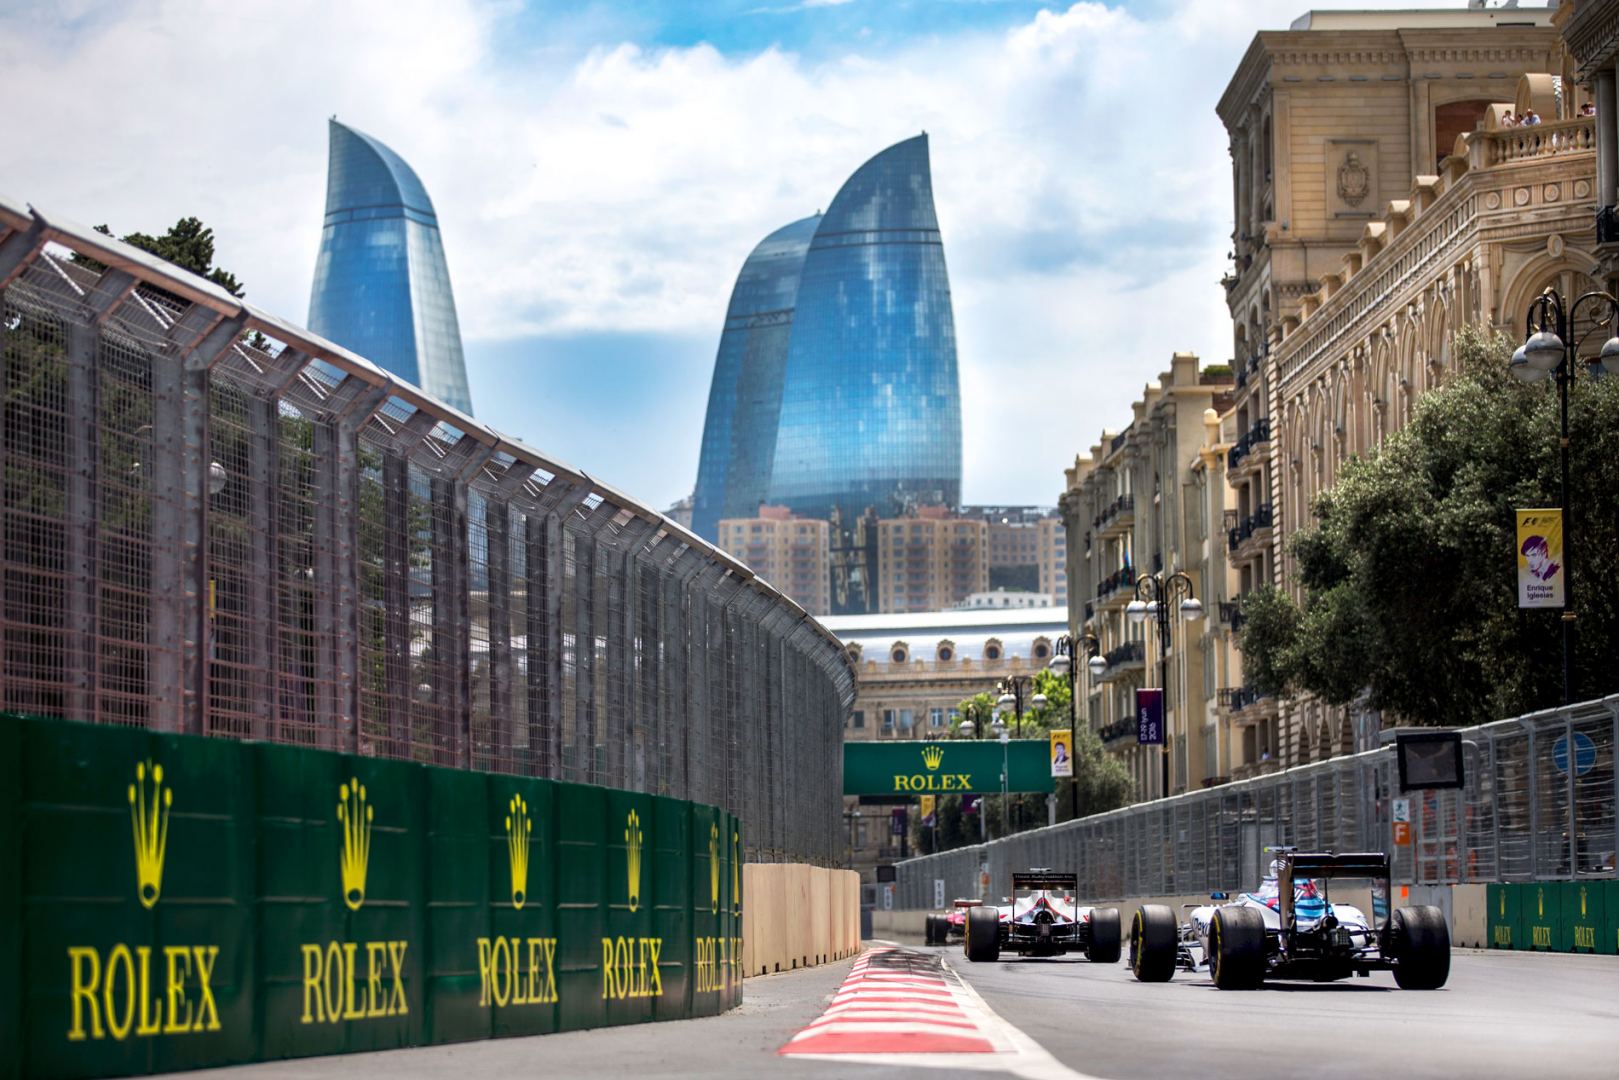 Accreditation of national media for F1 Azerbaijan Grand Prix 2021 begins